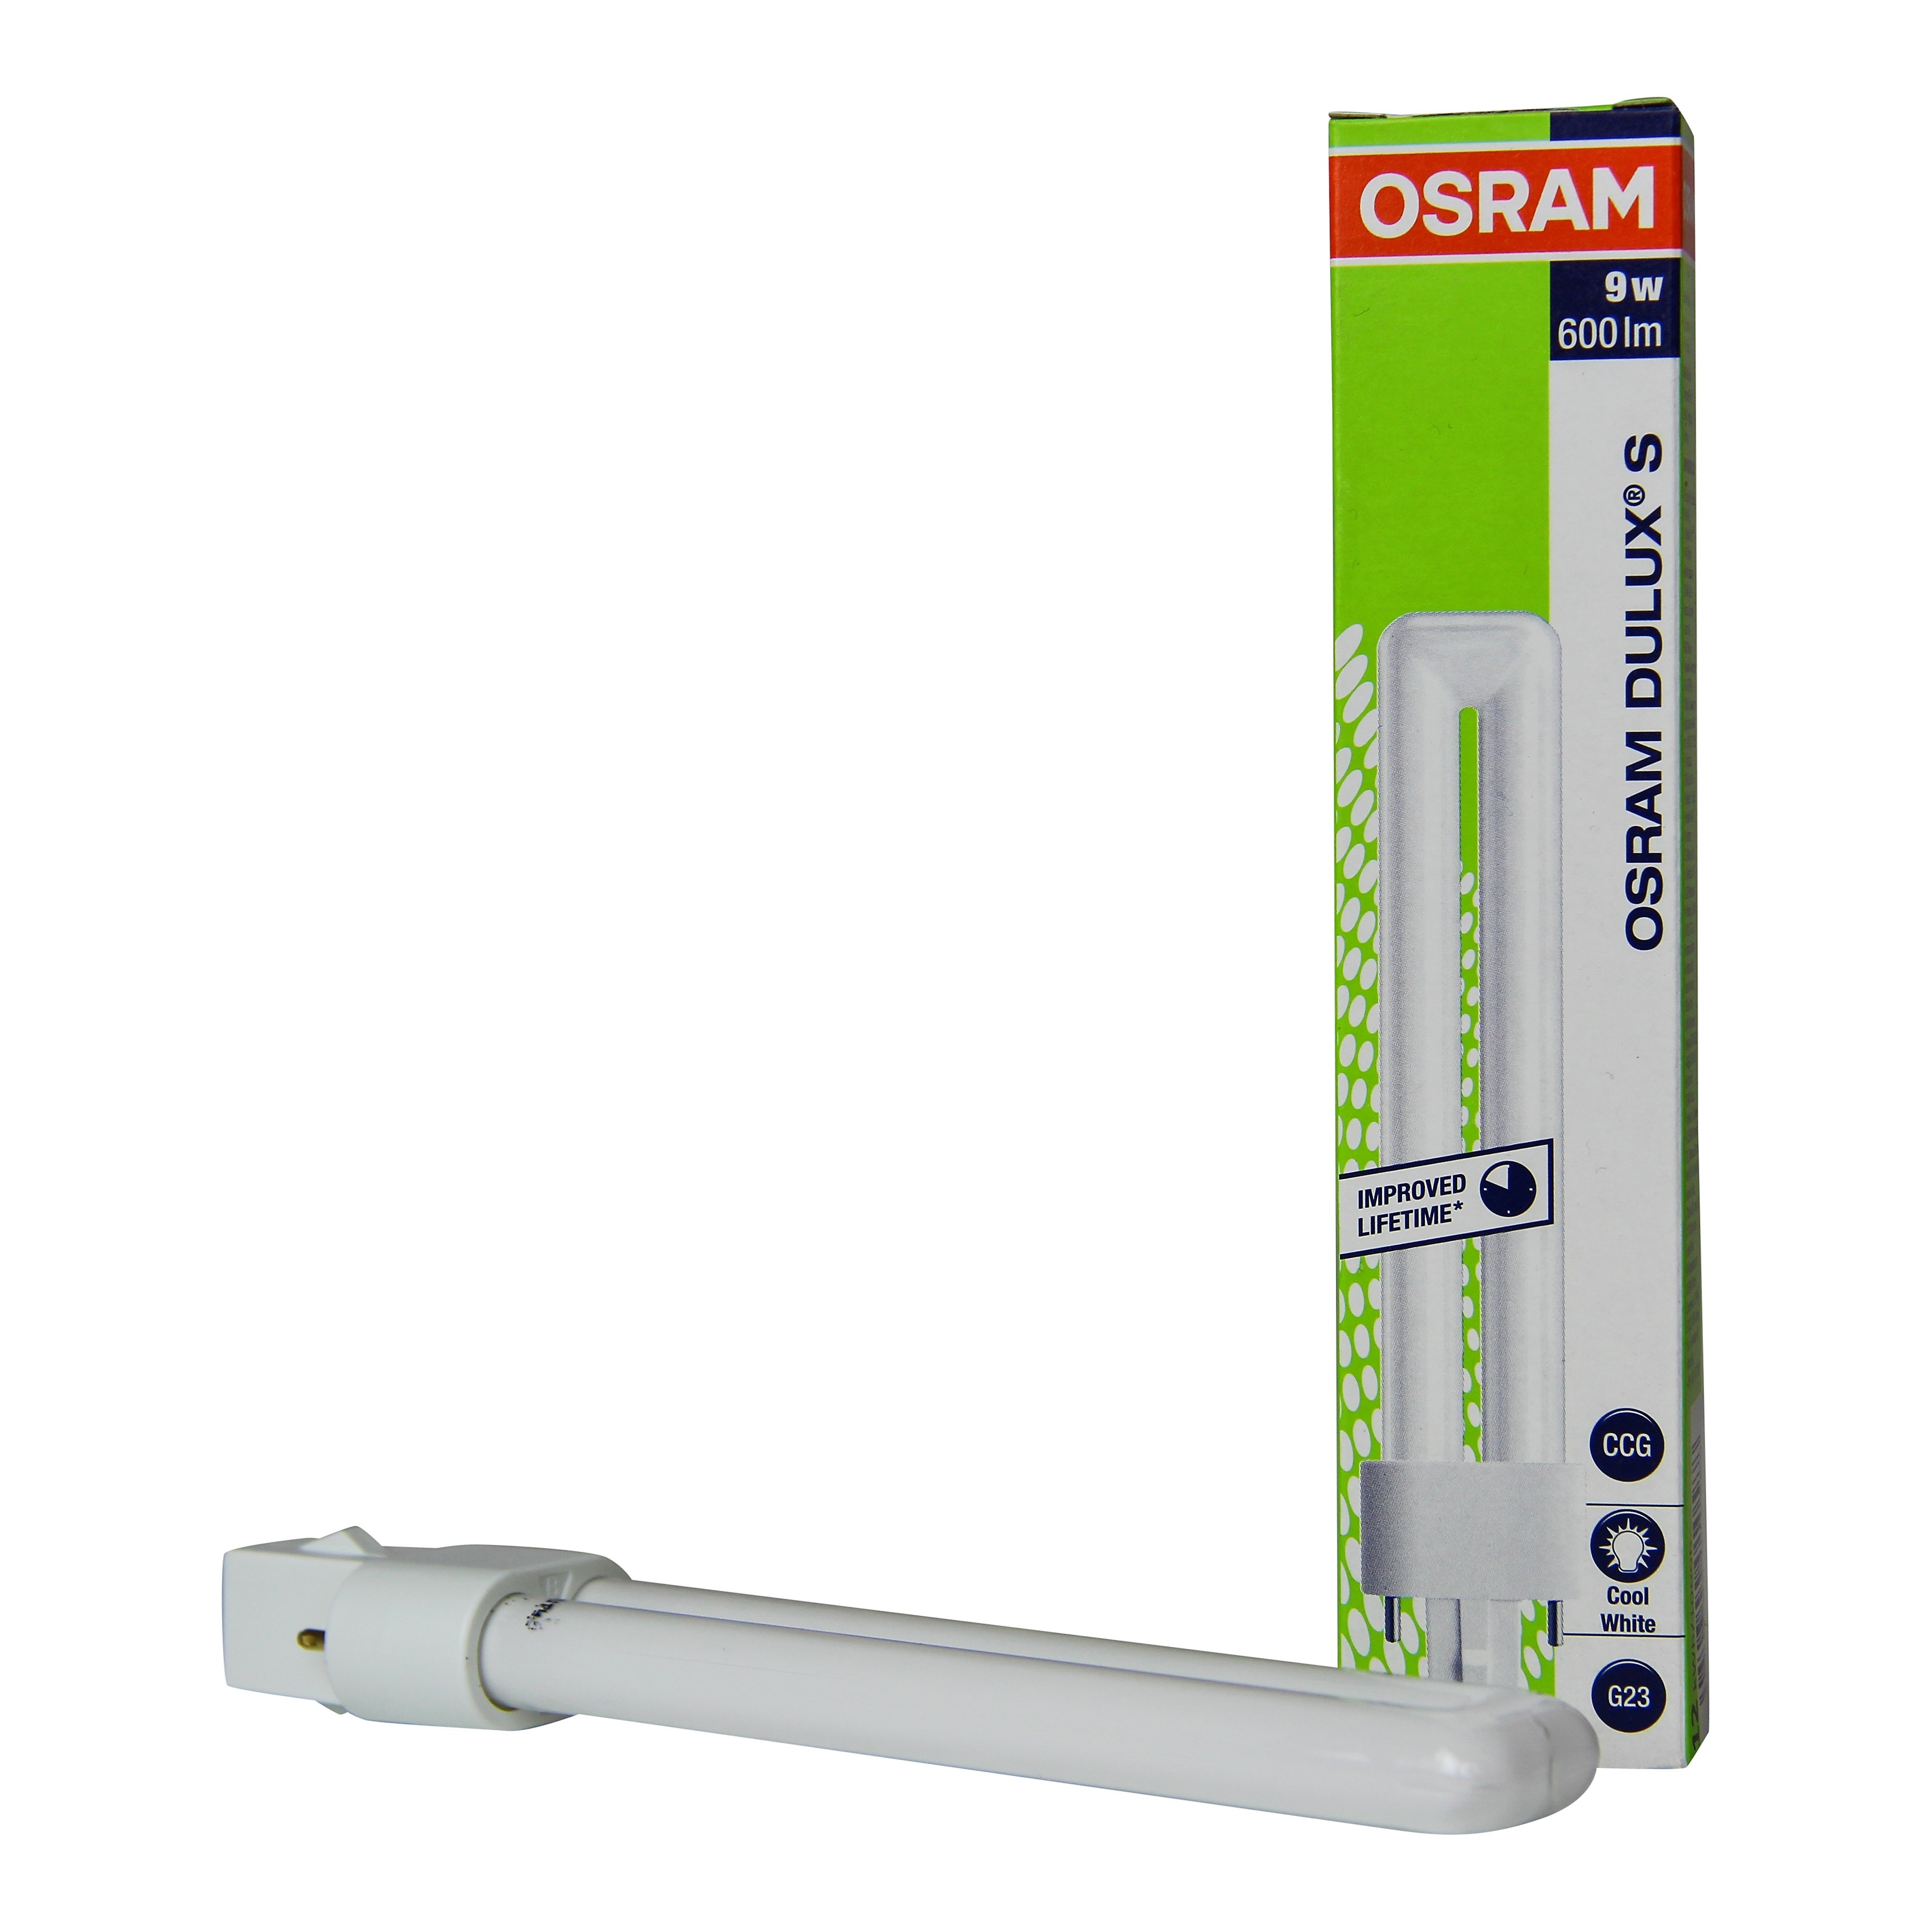 4 X Osram Dulux S 9w/840 G23 2pin Cool White Lamp 600LM Energy Saving